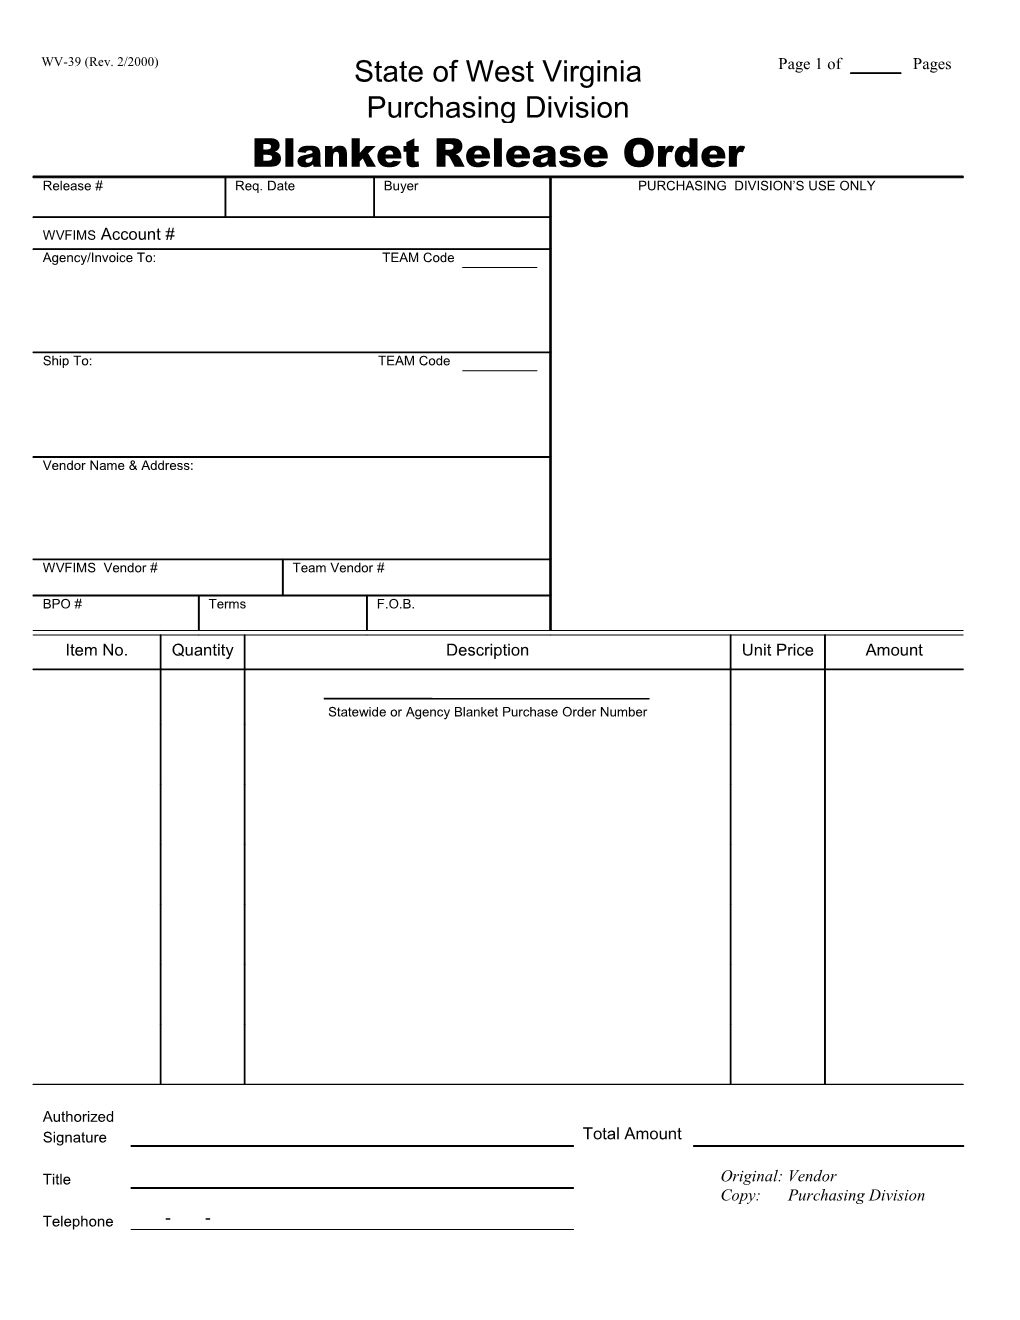 Blanket Release Order (Wv-39)